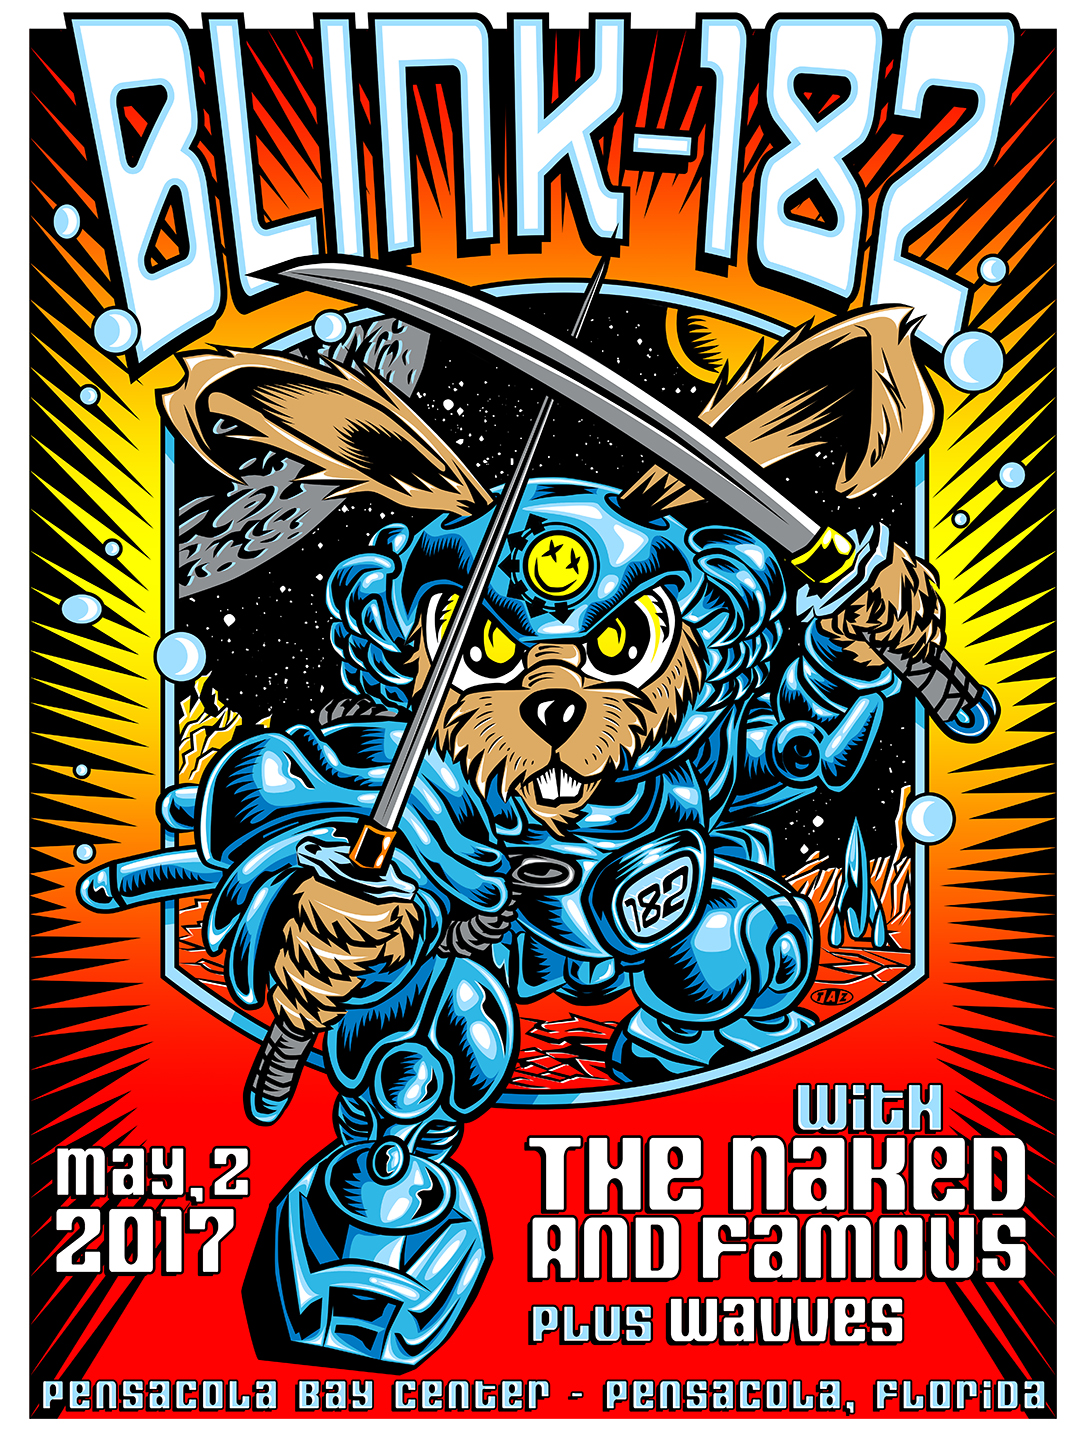 INSIDE THE ROCK POSTER FRAME BLOG: TAZ Blink 182 Pensacola Poster Release